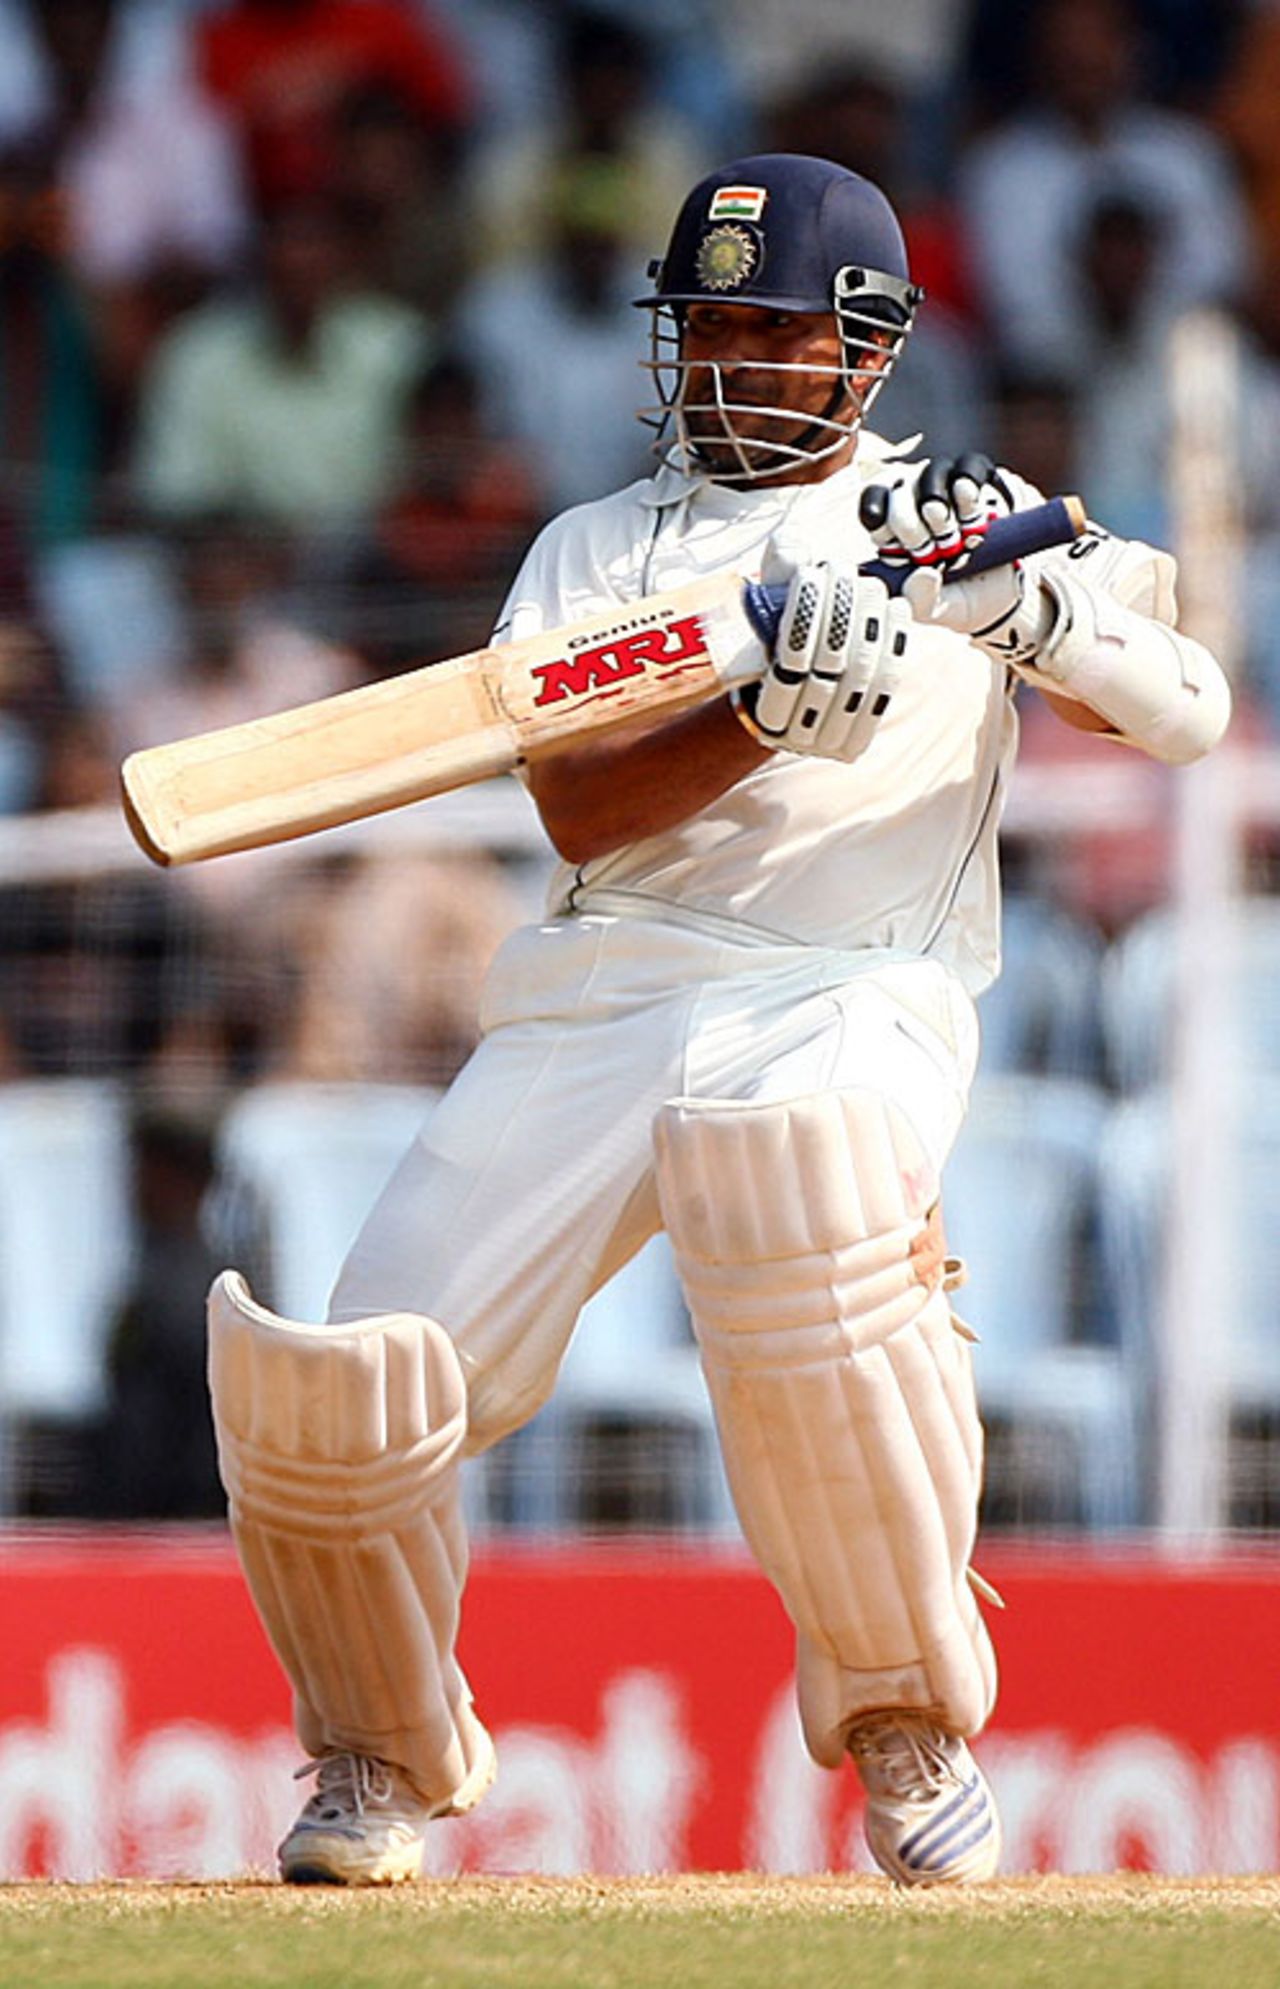 Sachin Tendulkar slices a rising delivery, India v England, 1st Test, Chennai, 5th day, December 15, 2008